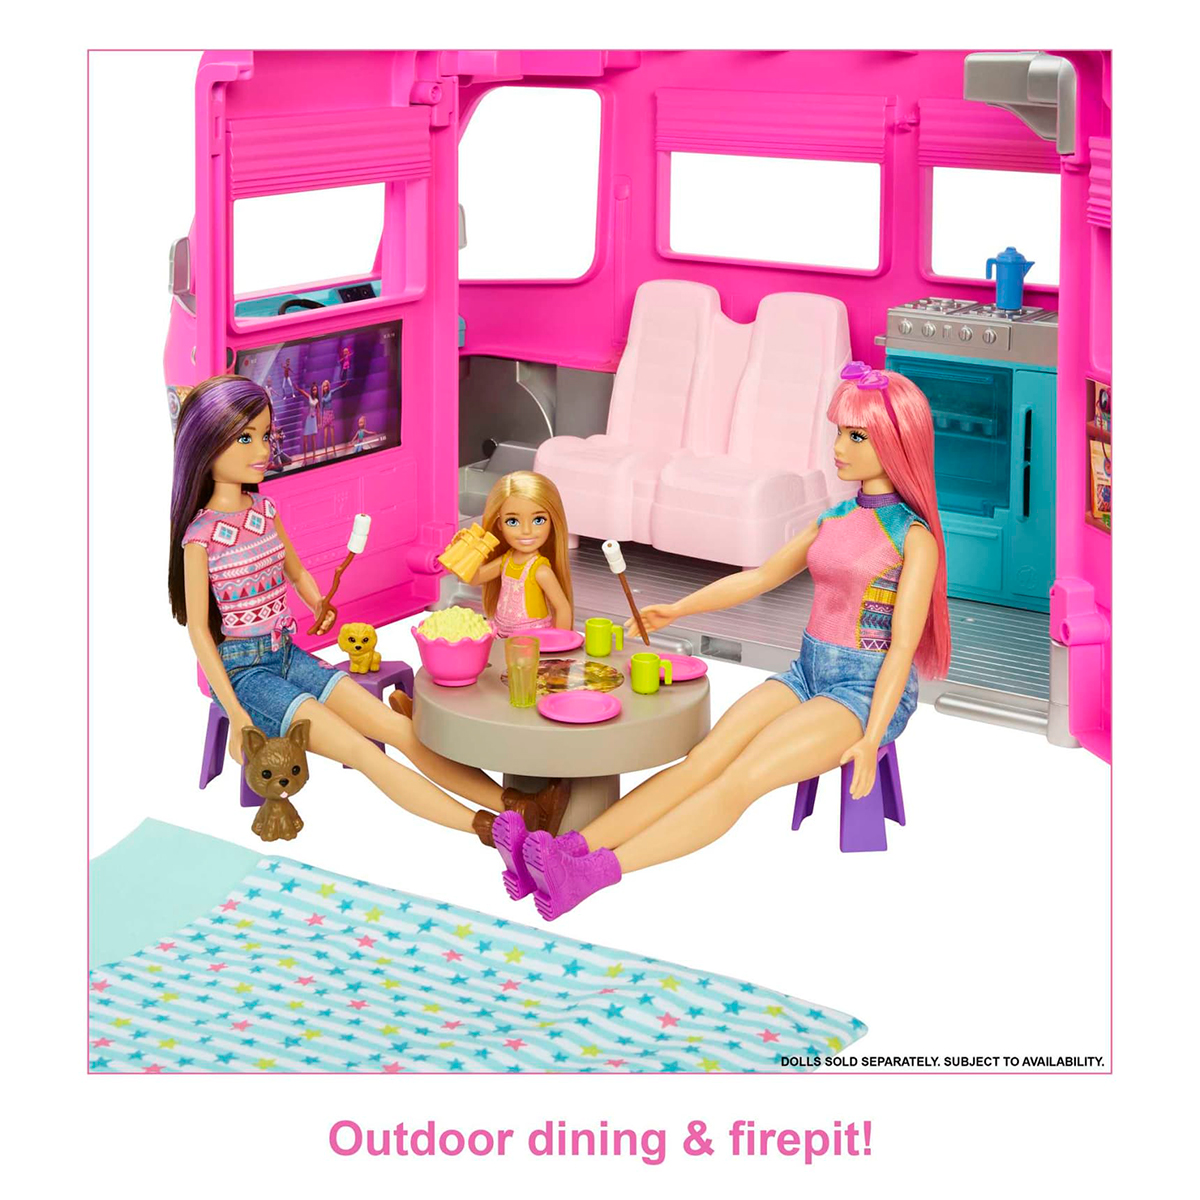 Barbie(R) 3-in-1 Dream Camper(tm) Playset